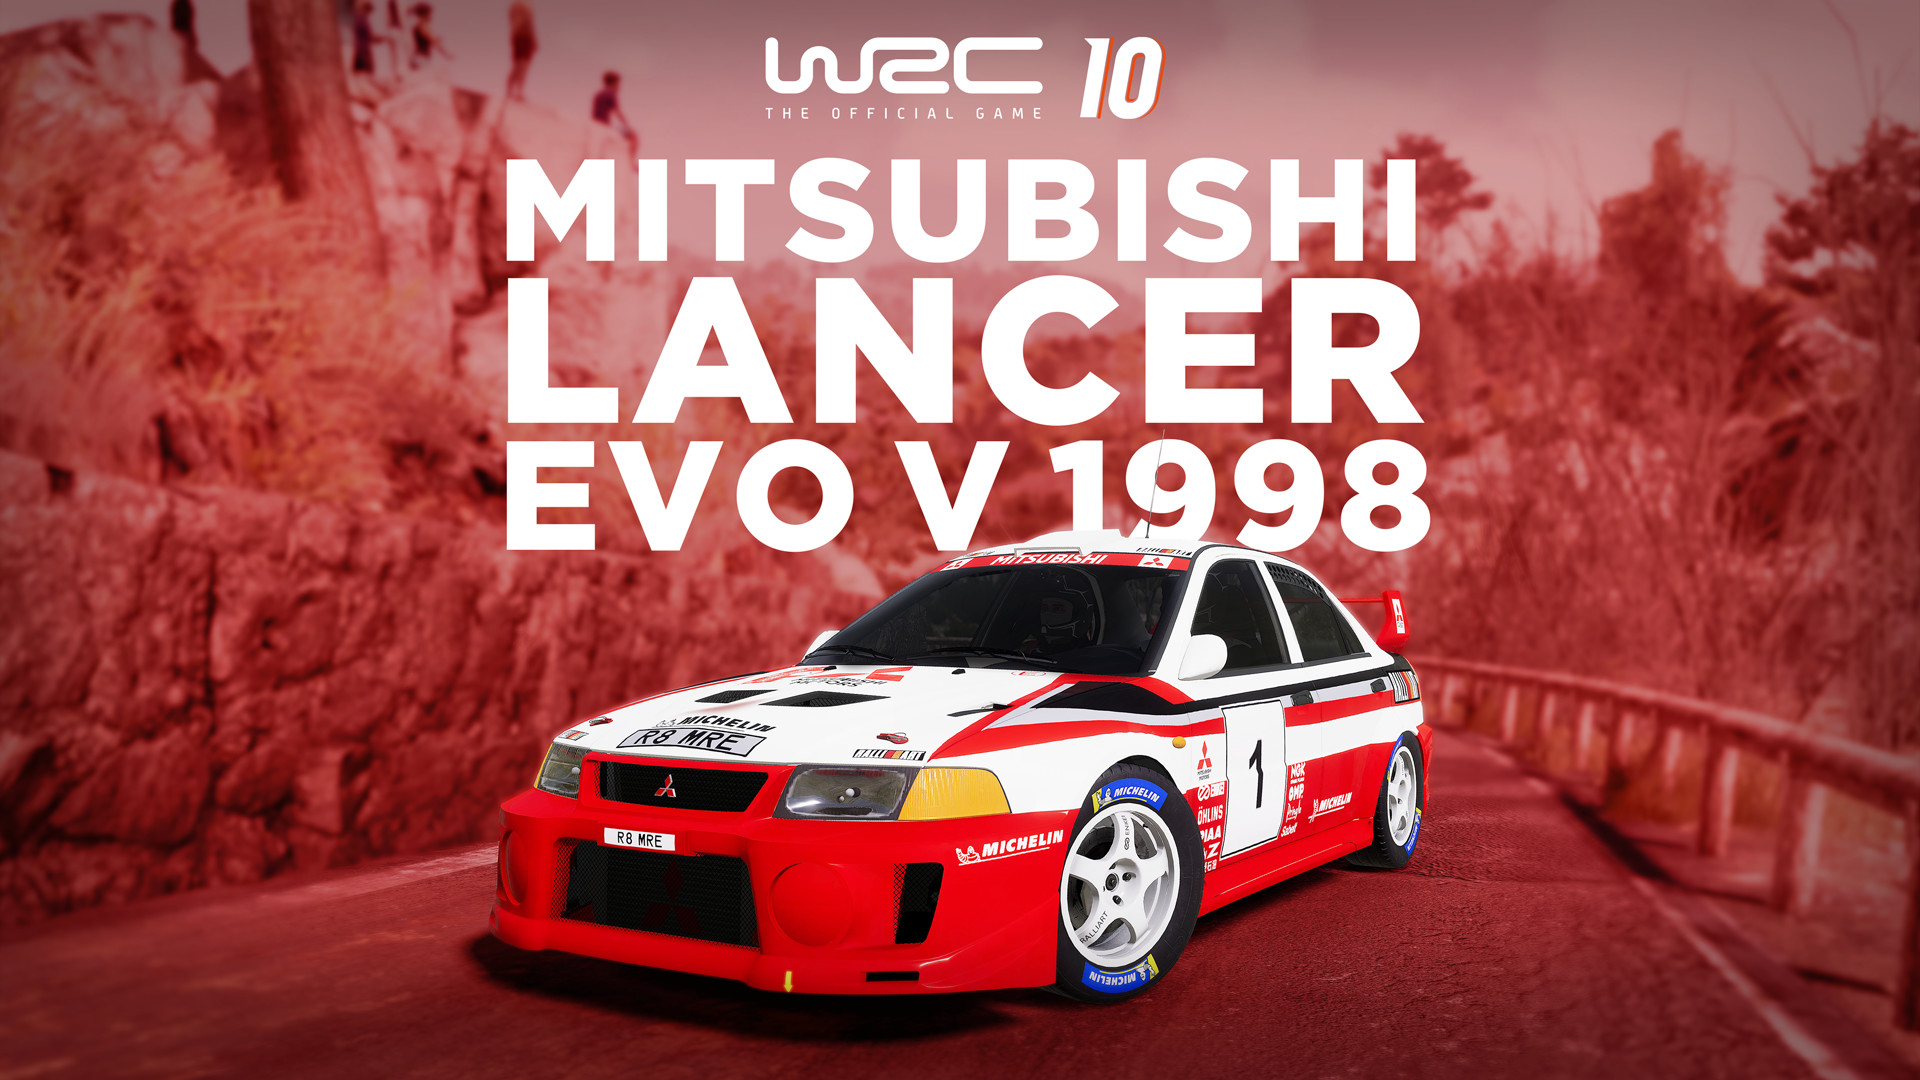 WRC 10 Mitsubishi Lancer Evo V 1998 on Steam